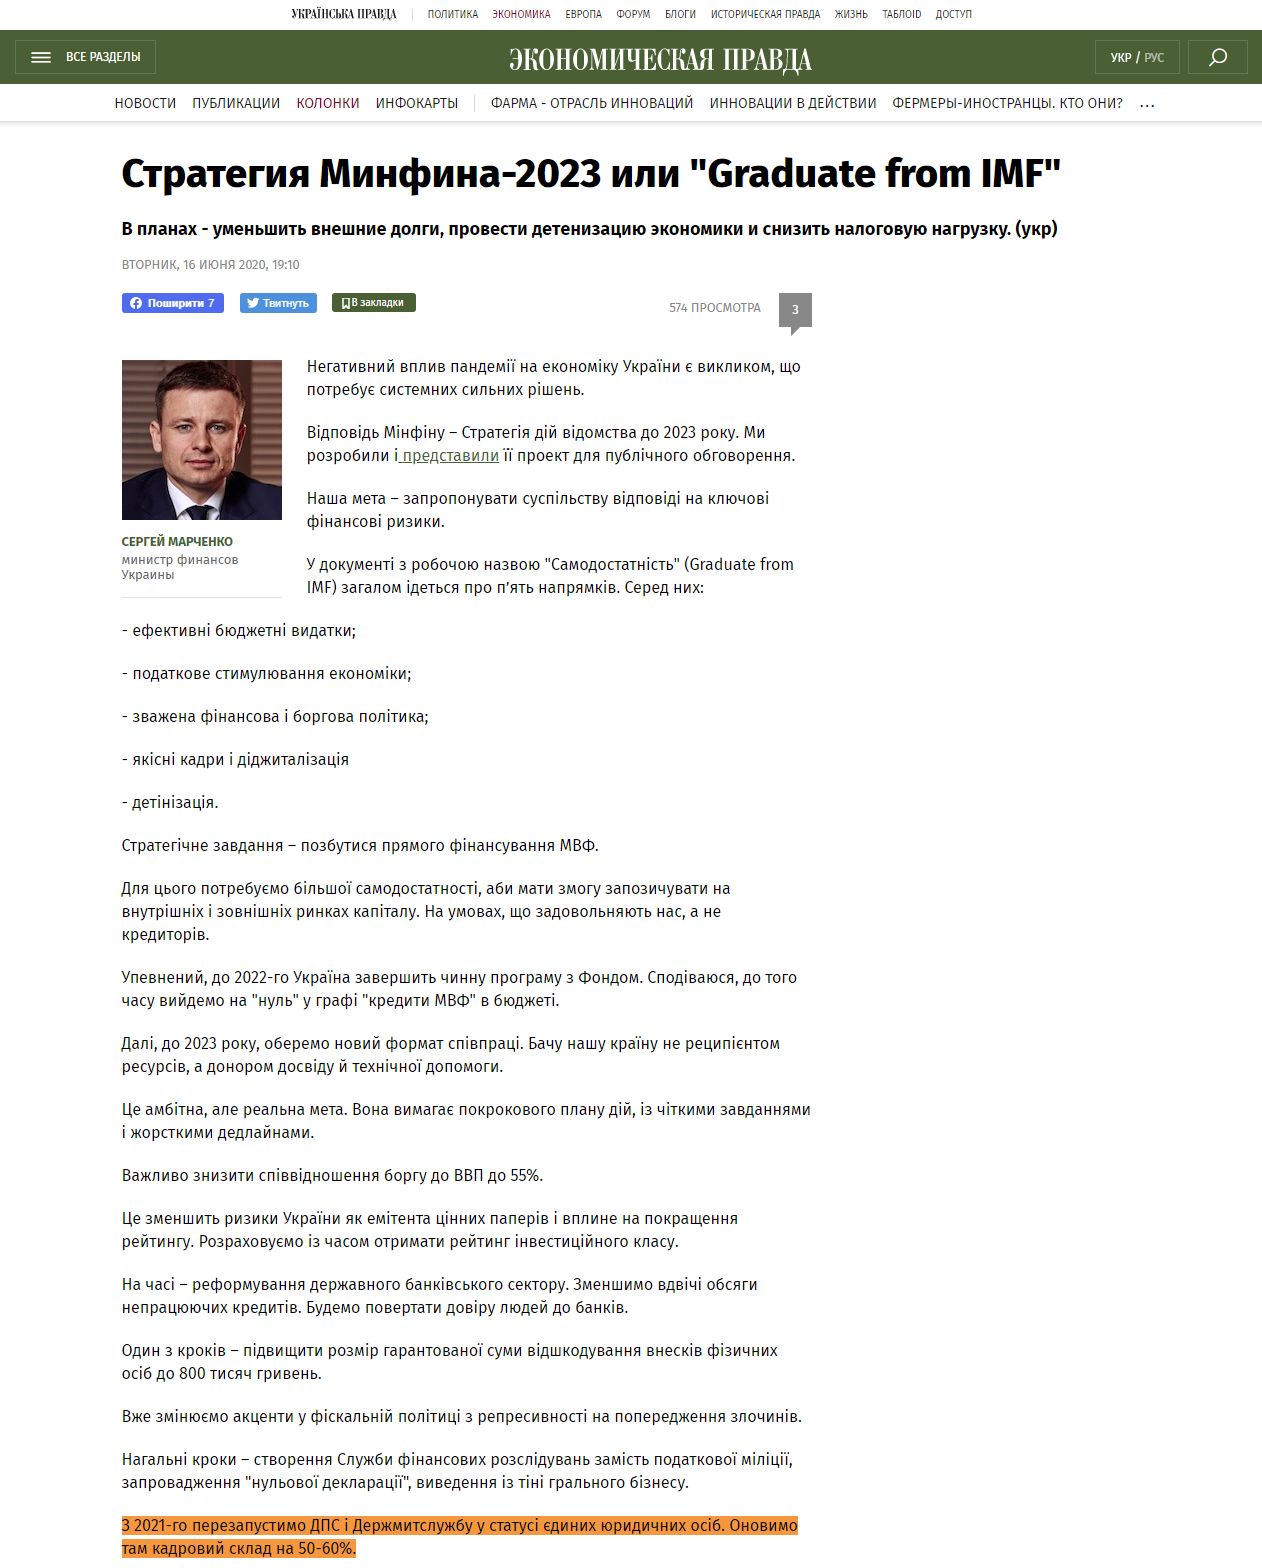 https://www.epravda.com.ua/rus/columns/2020/06/16/661878/